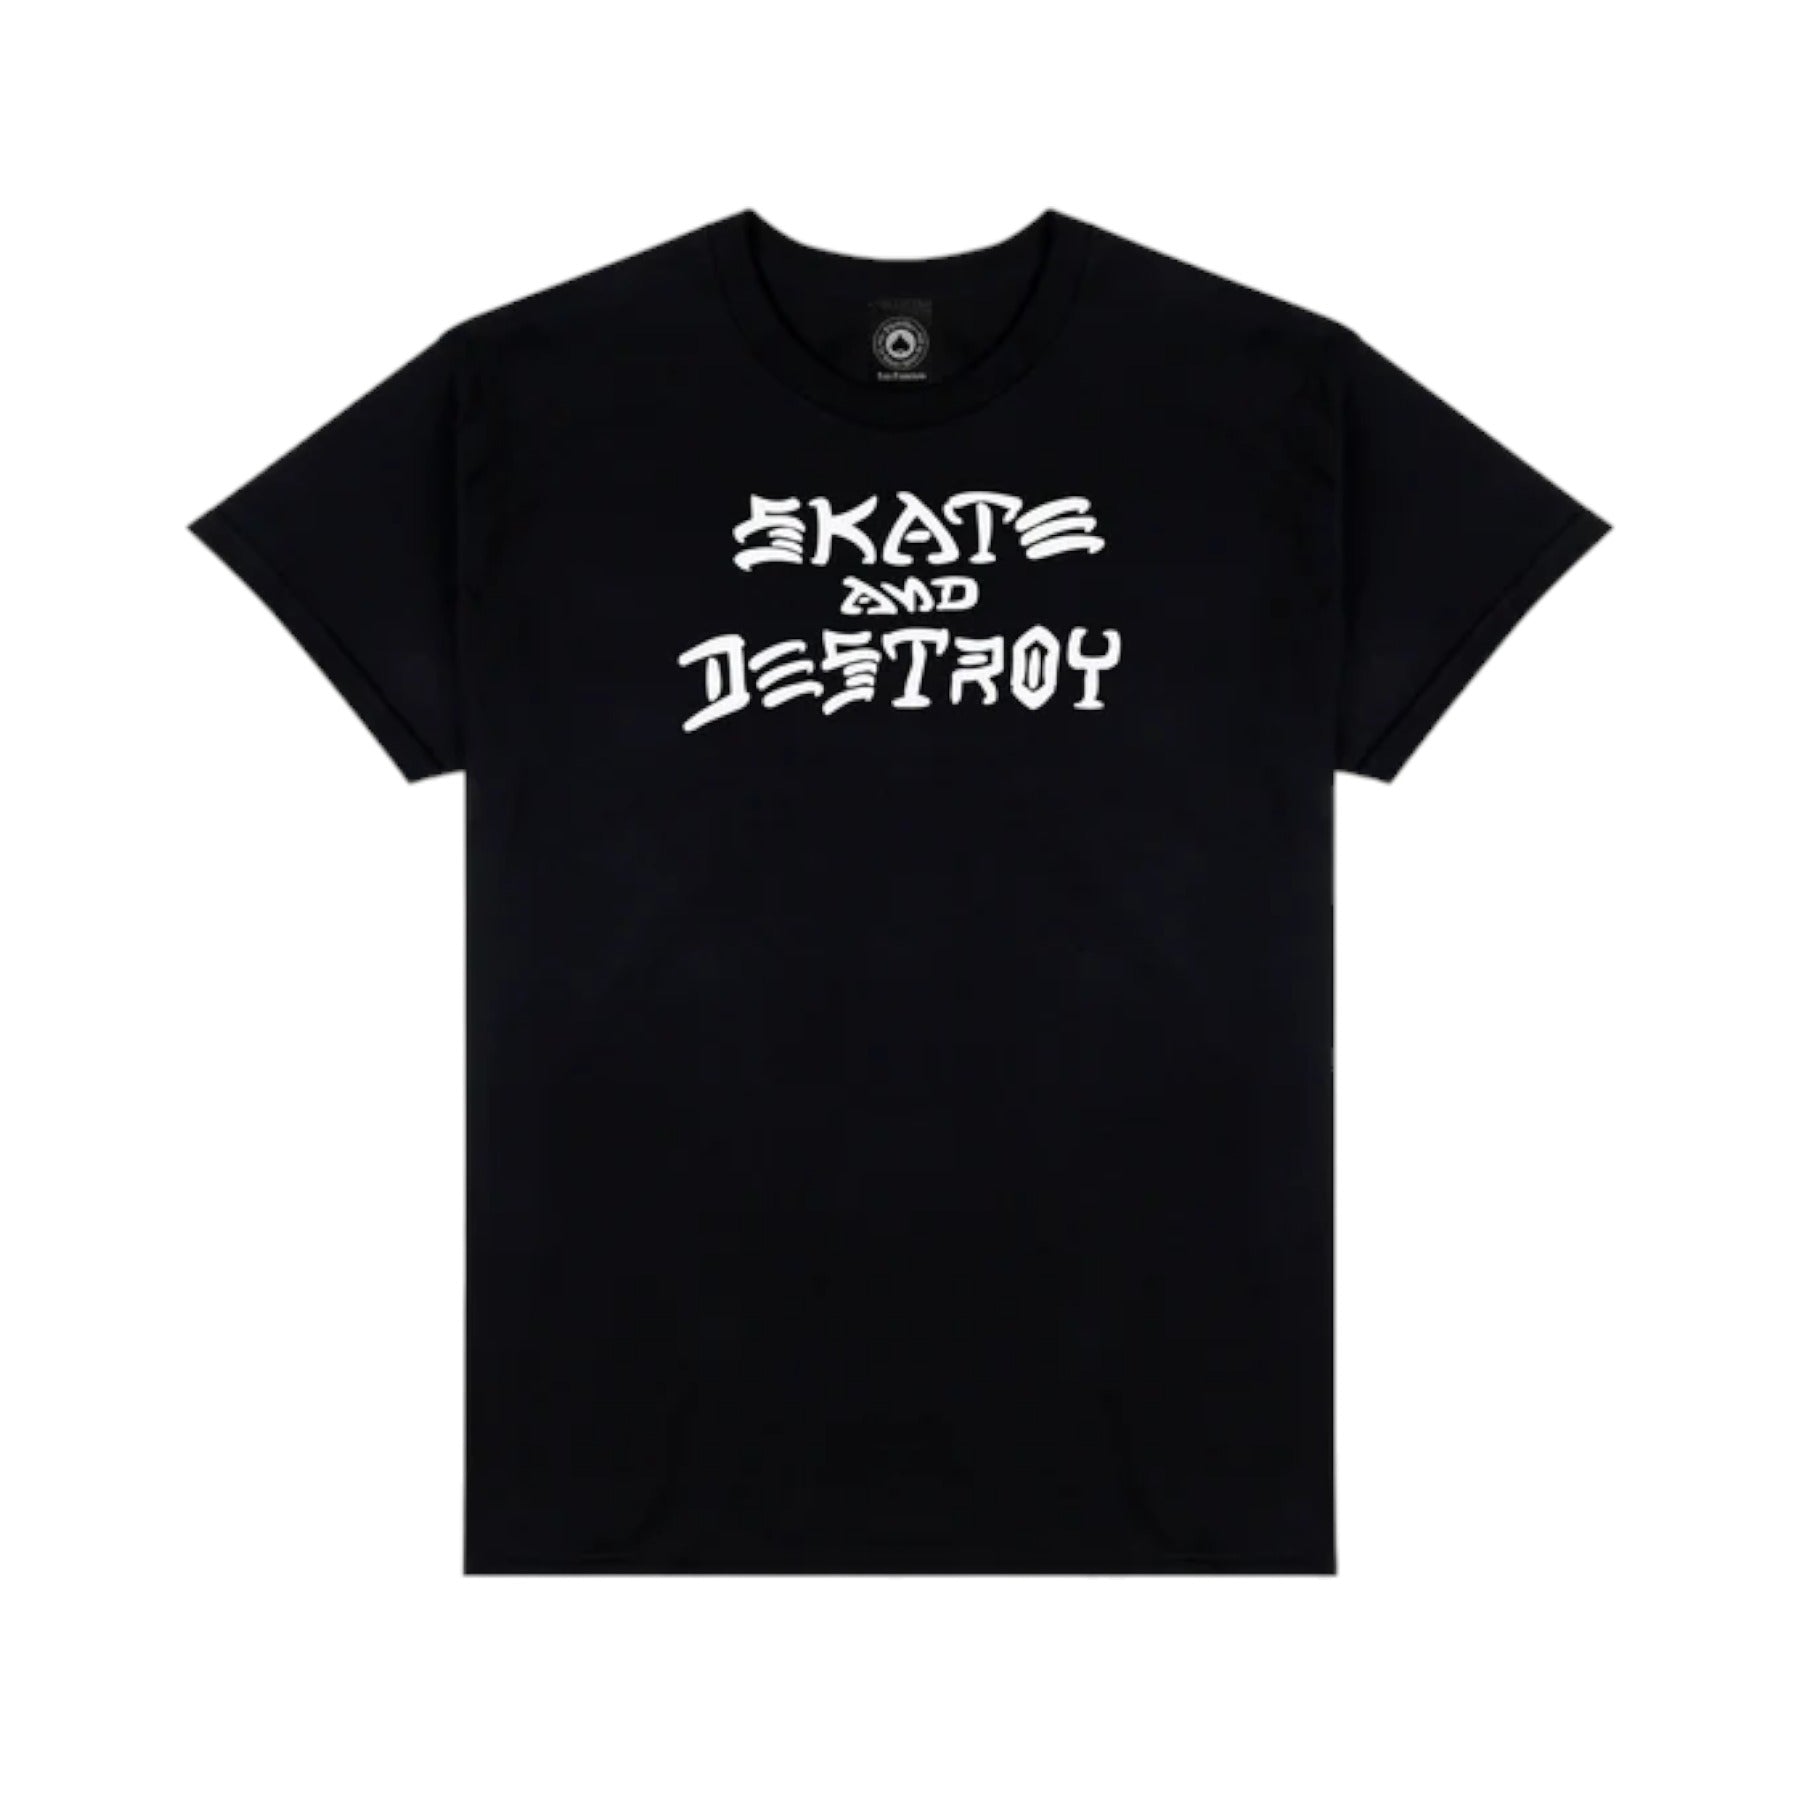 Thrasher Skate And Destroy S/S Tee - Black